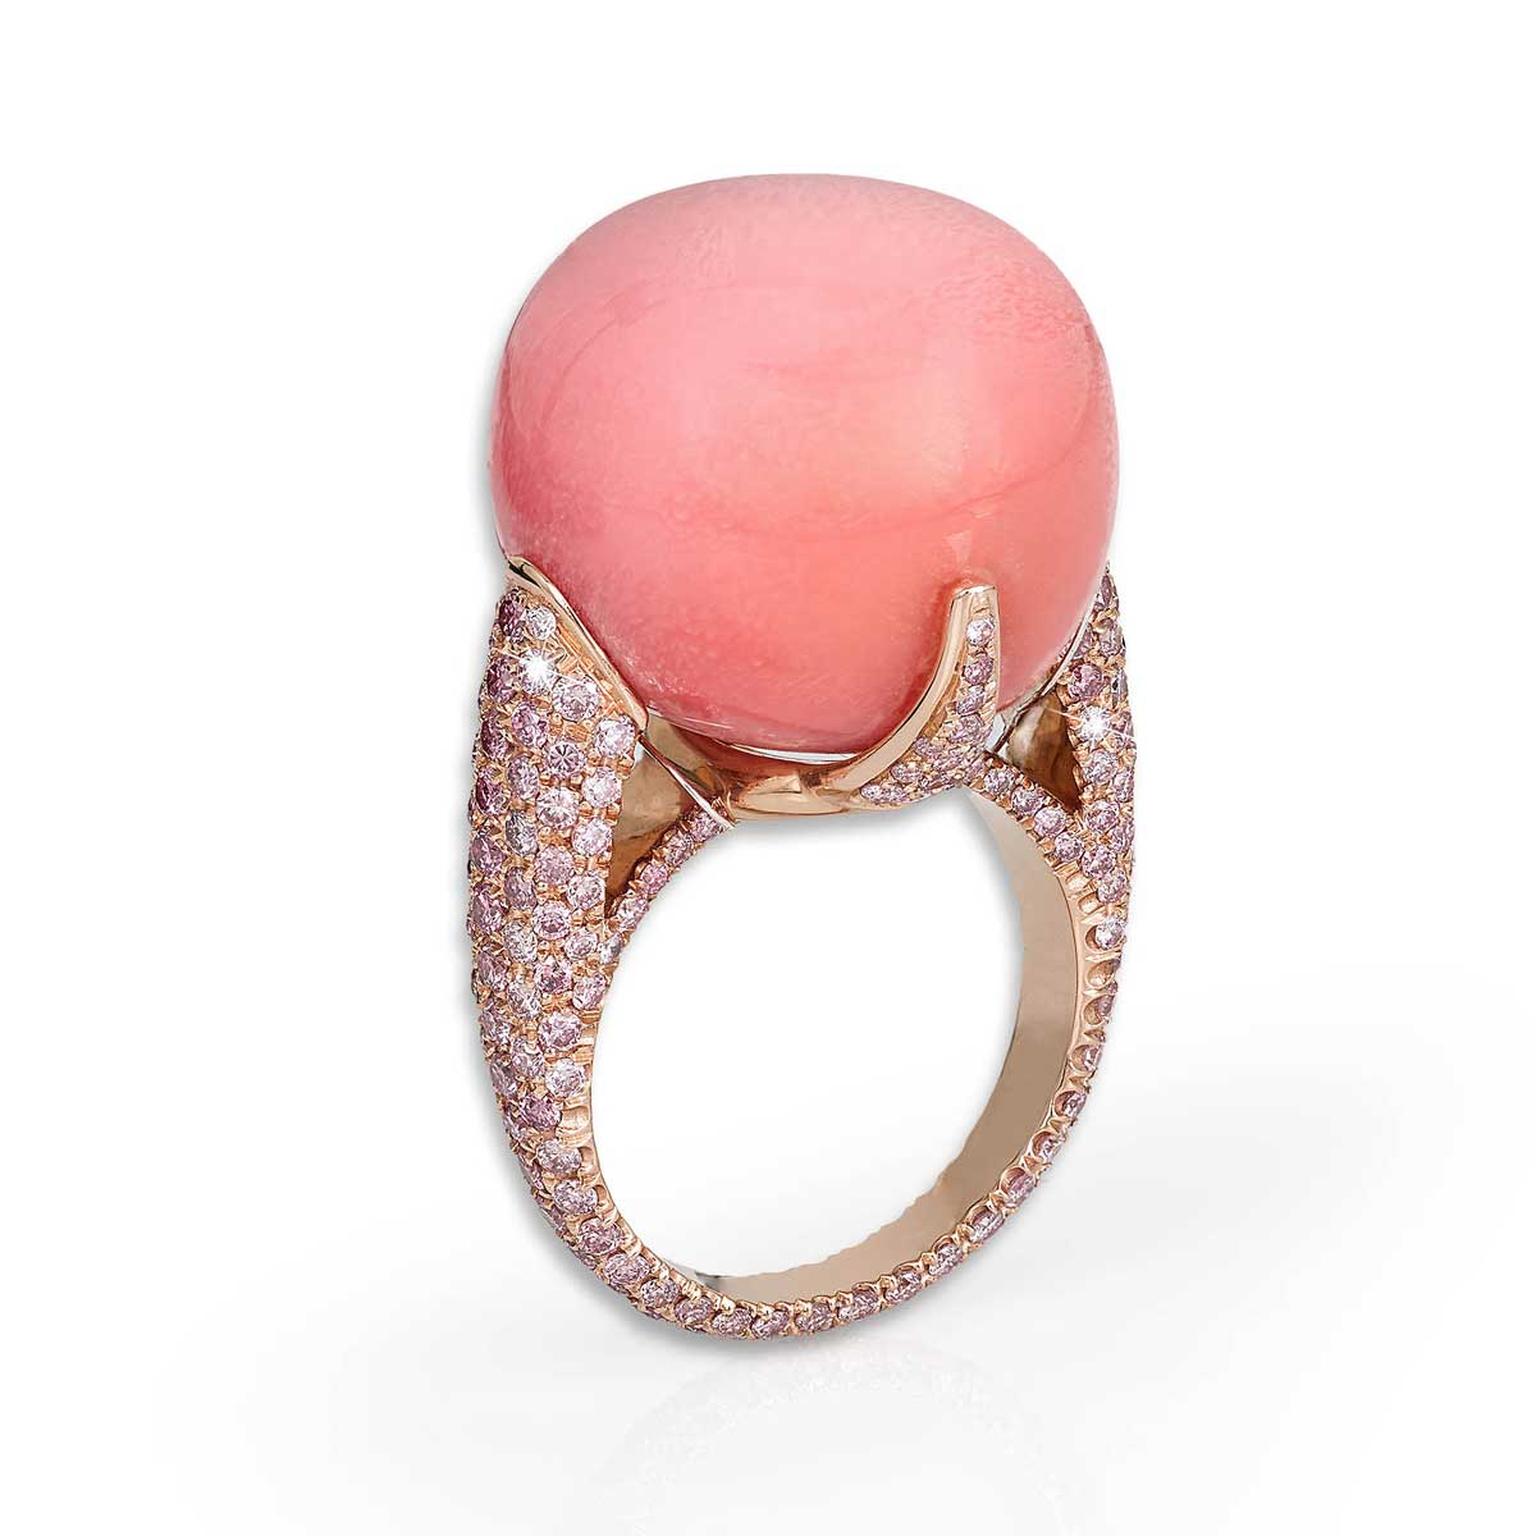 David Morris conch pearl ring weighing 44.55 carats